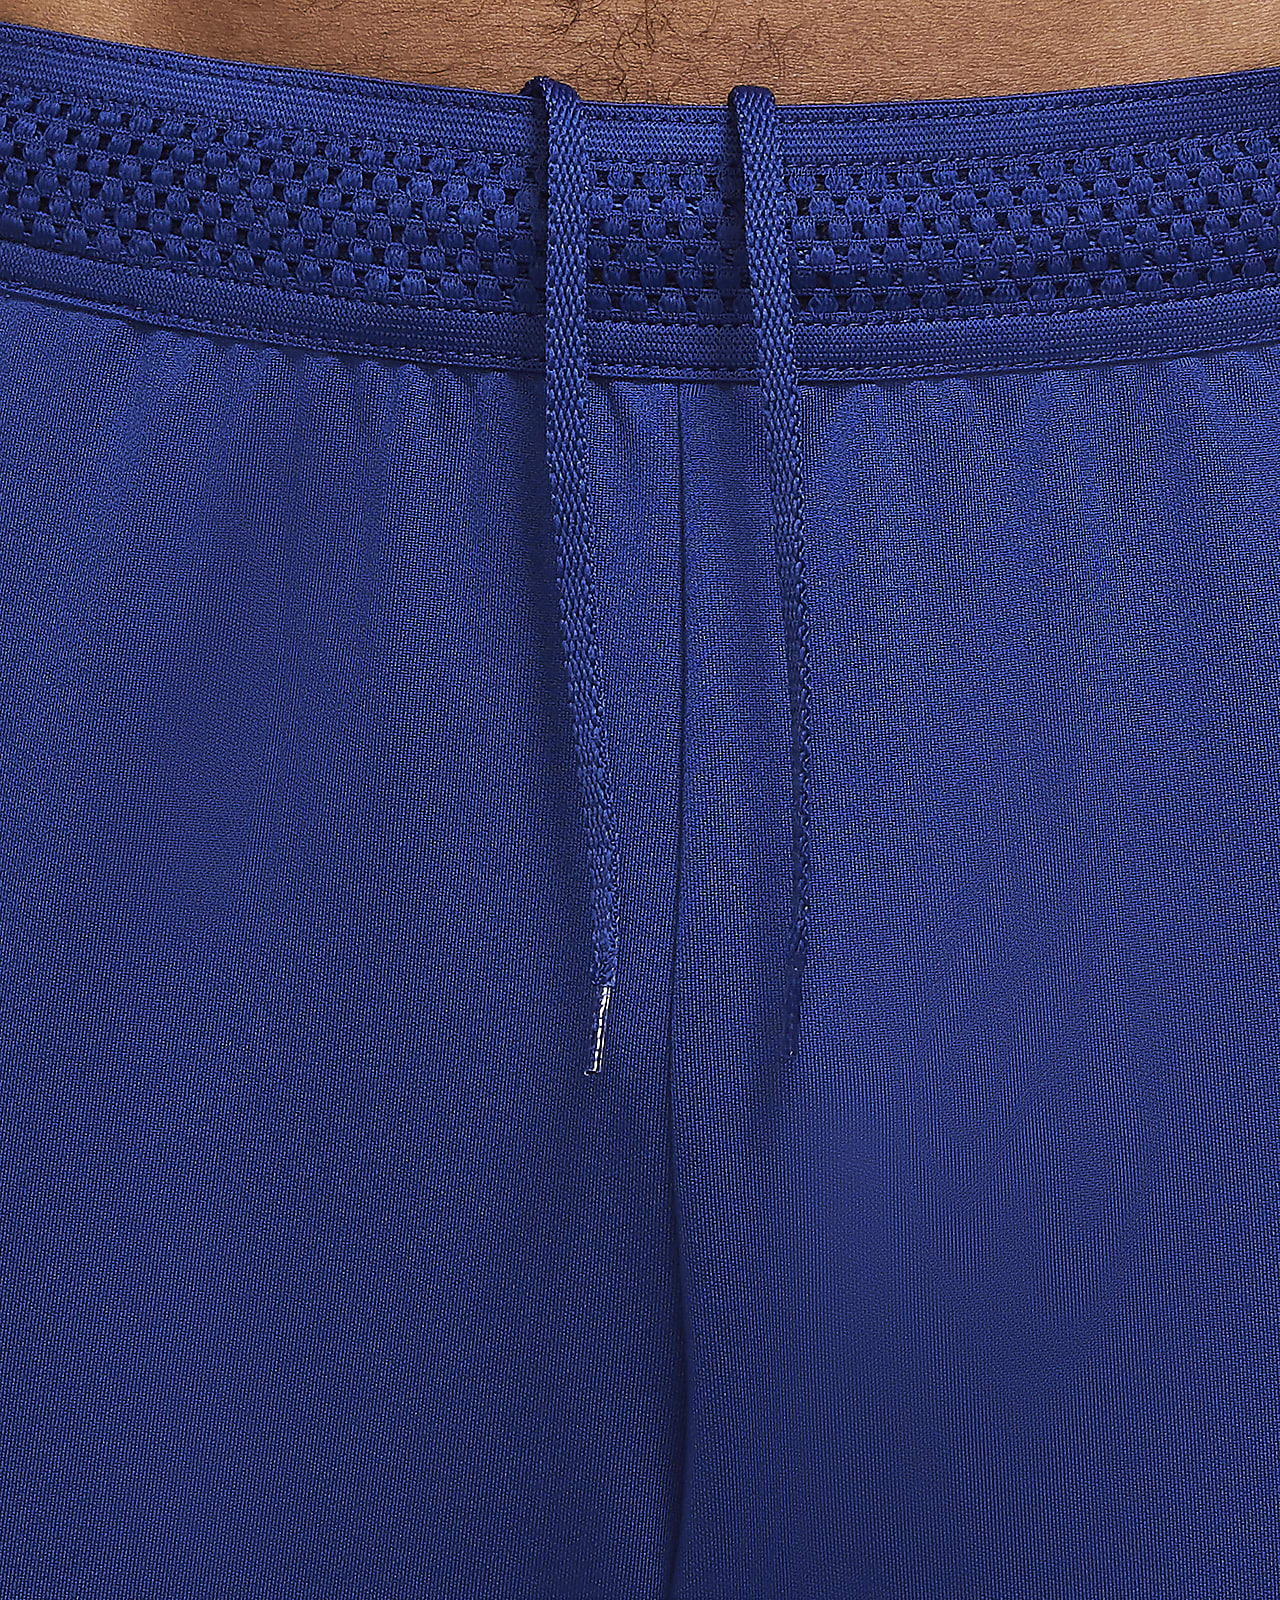 Nike Dri-Fit Vapor Speed Football Compression Pants Pad Blue Size